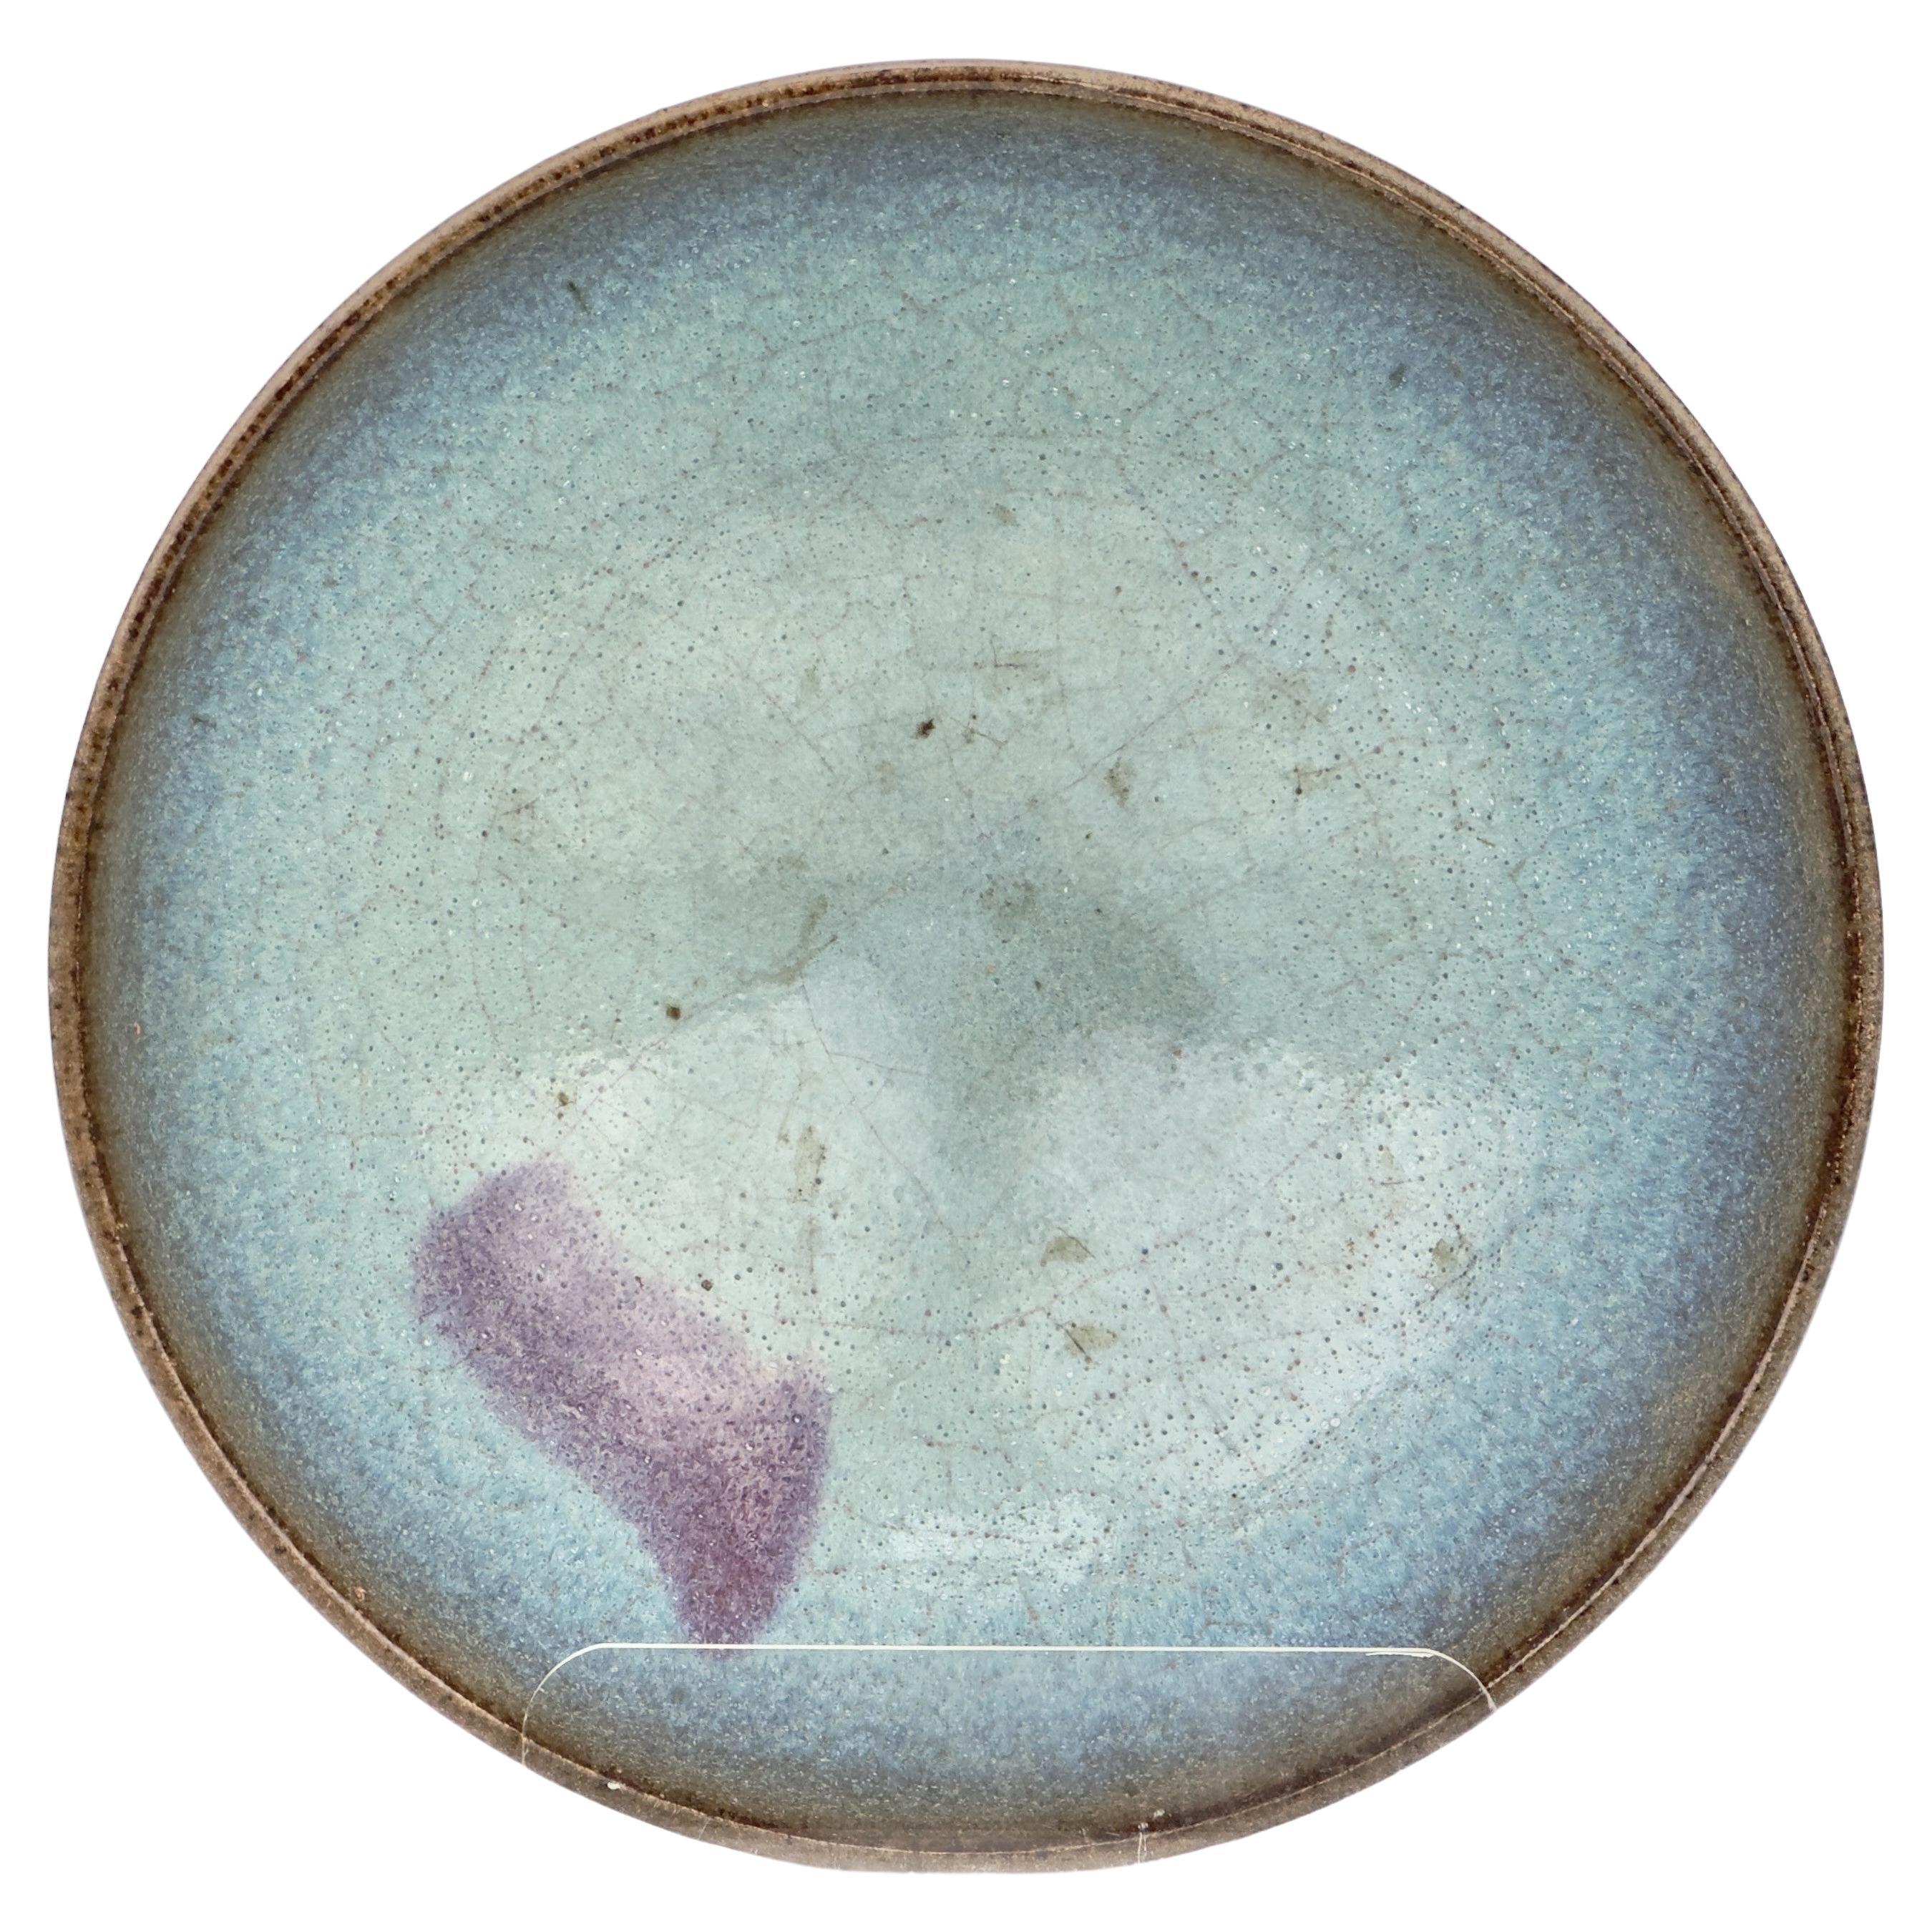 Jun Ware purple-splashed bowl, Yuan dynasty